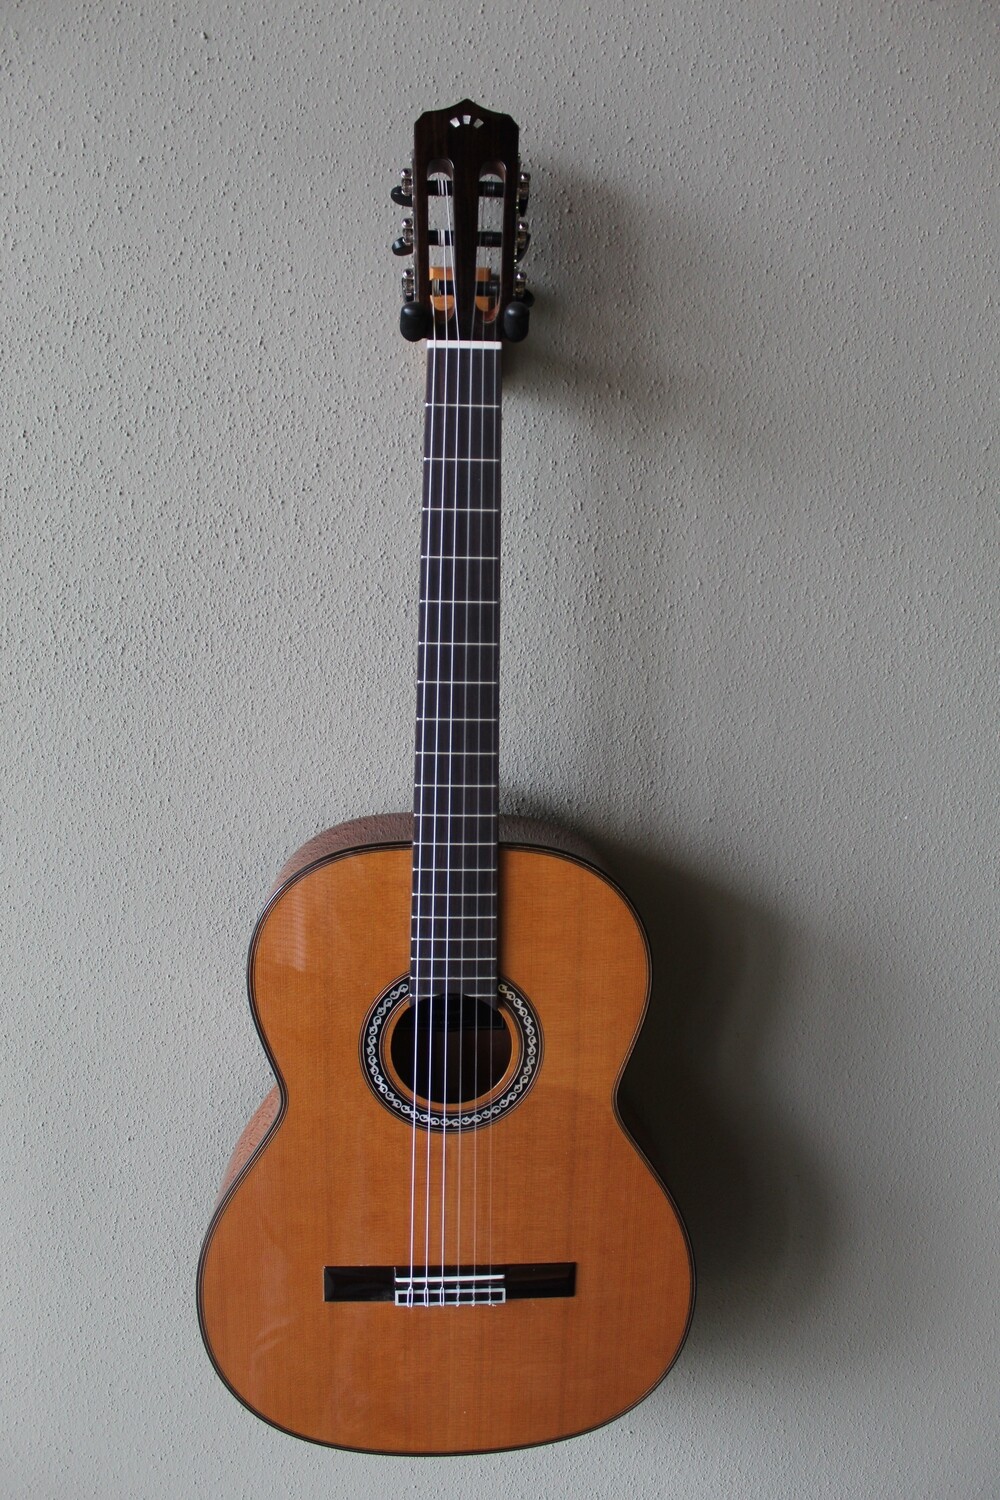 Cordoba C9 Crossover Nylon String Classical Guitar - Cedar Top